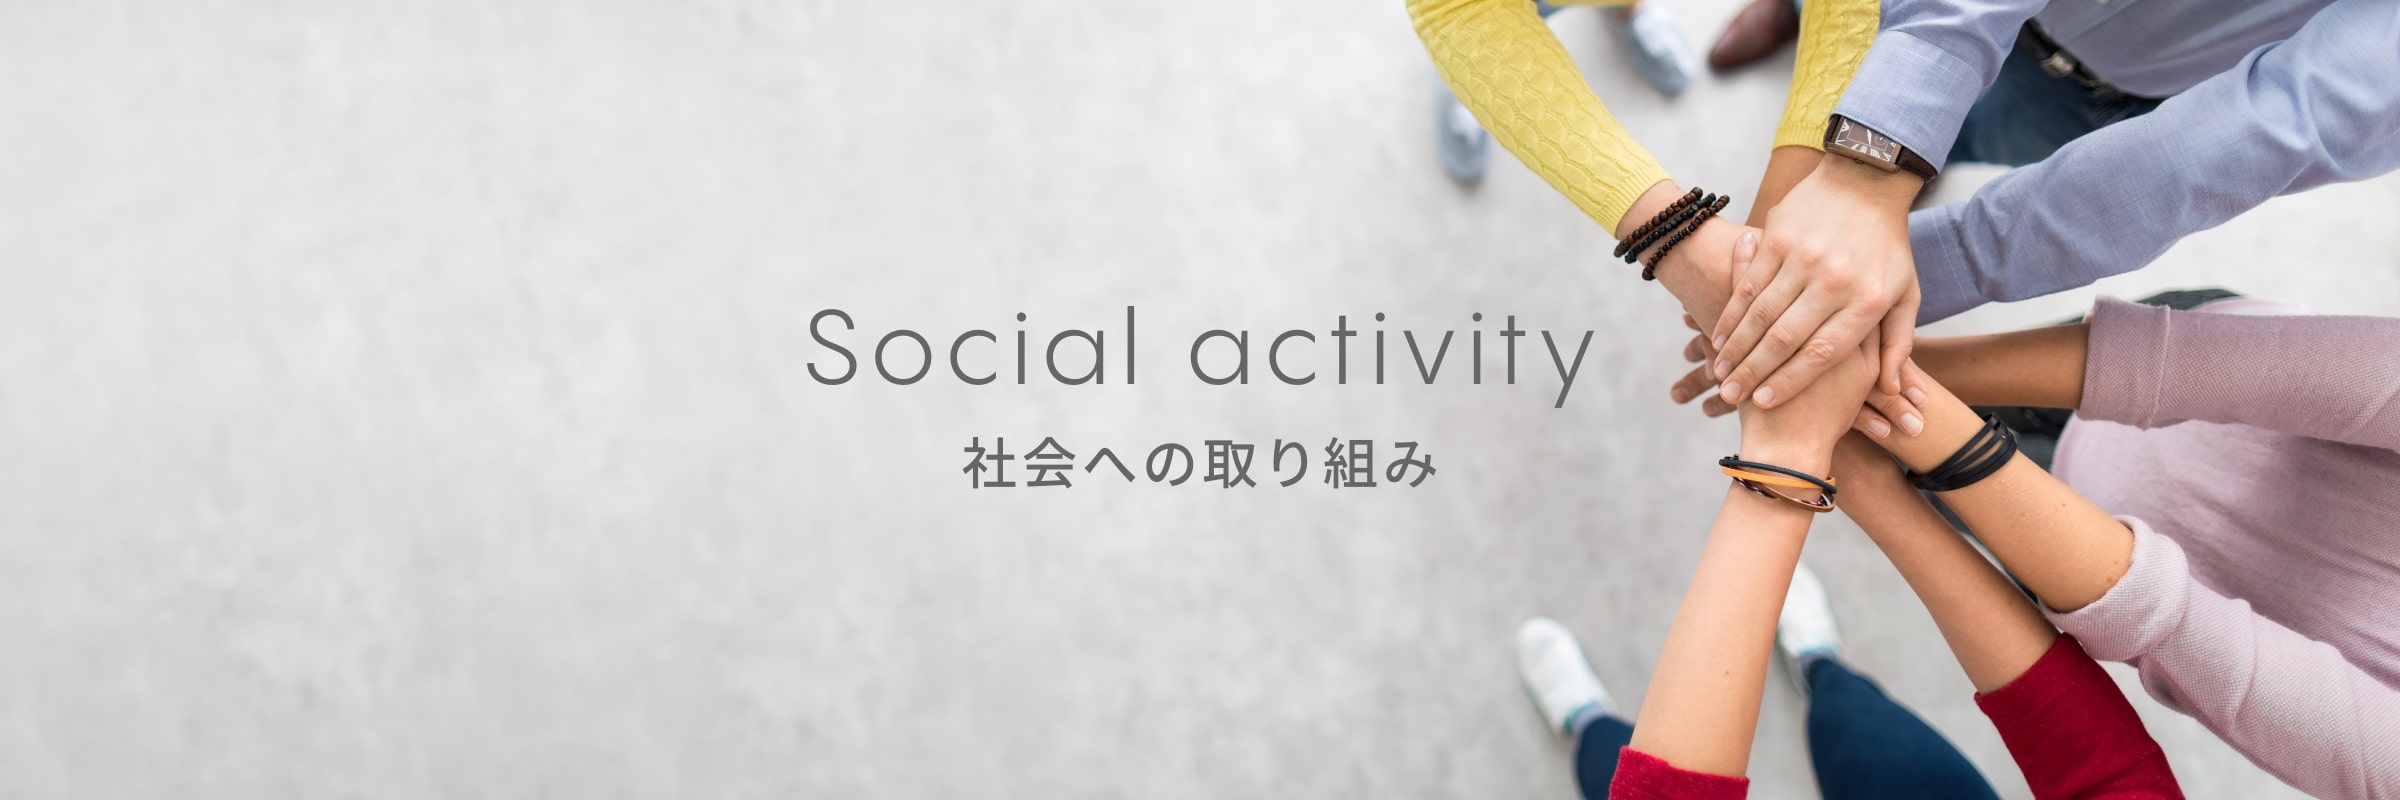 Social activity 社会への取り組み